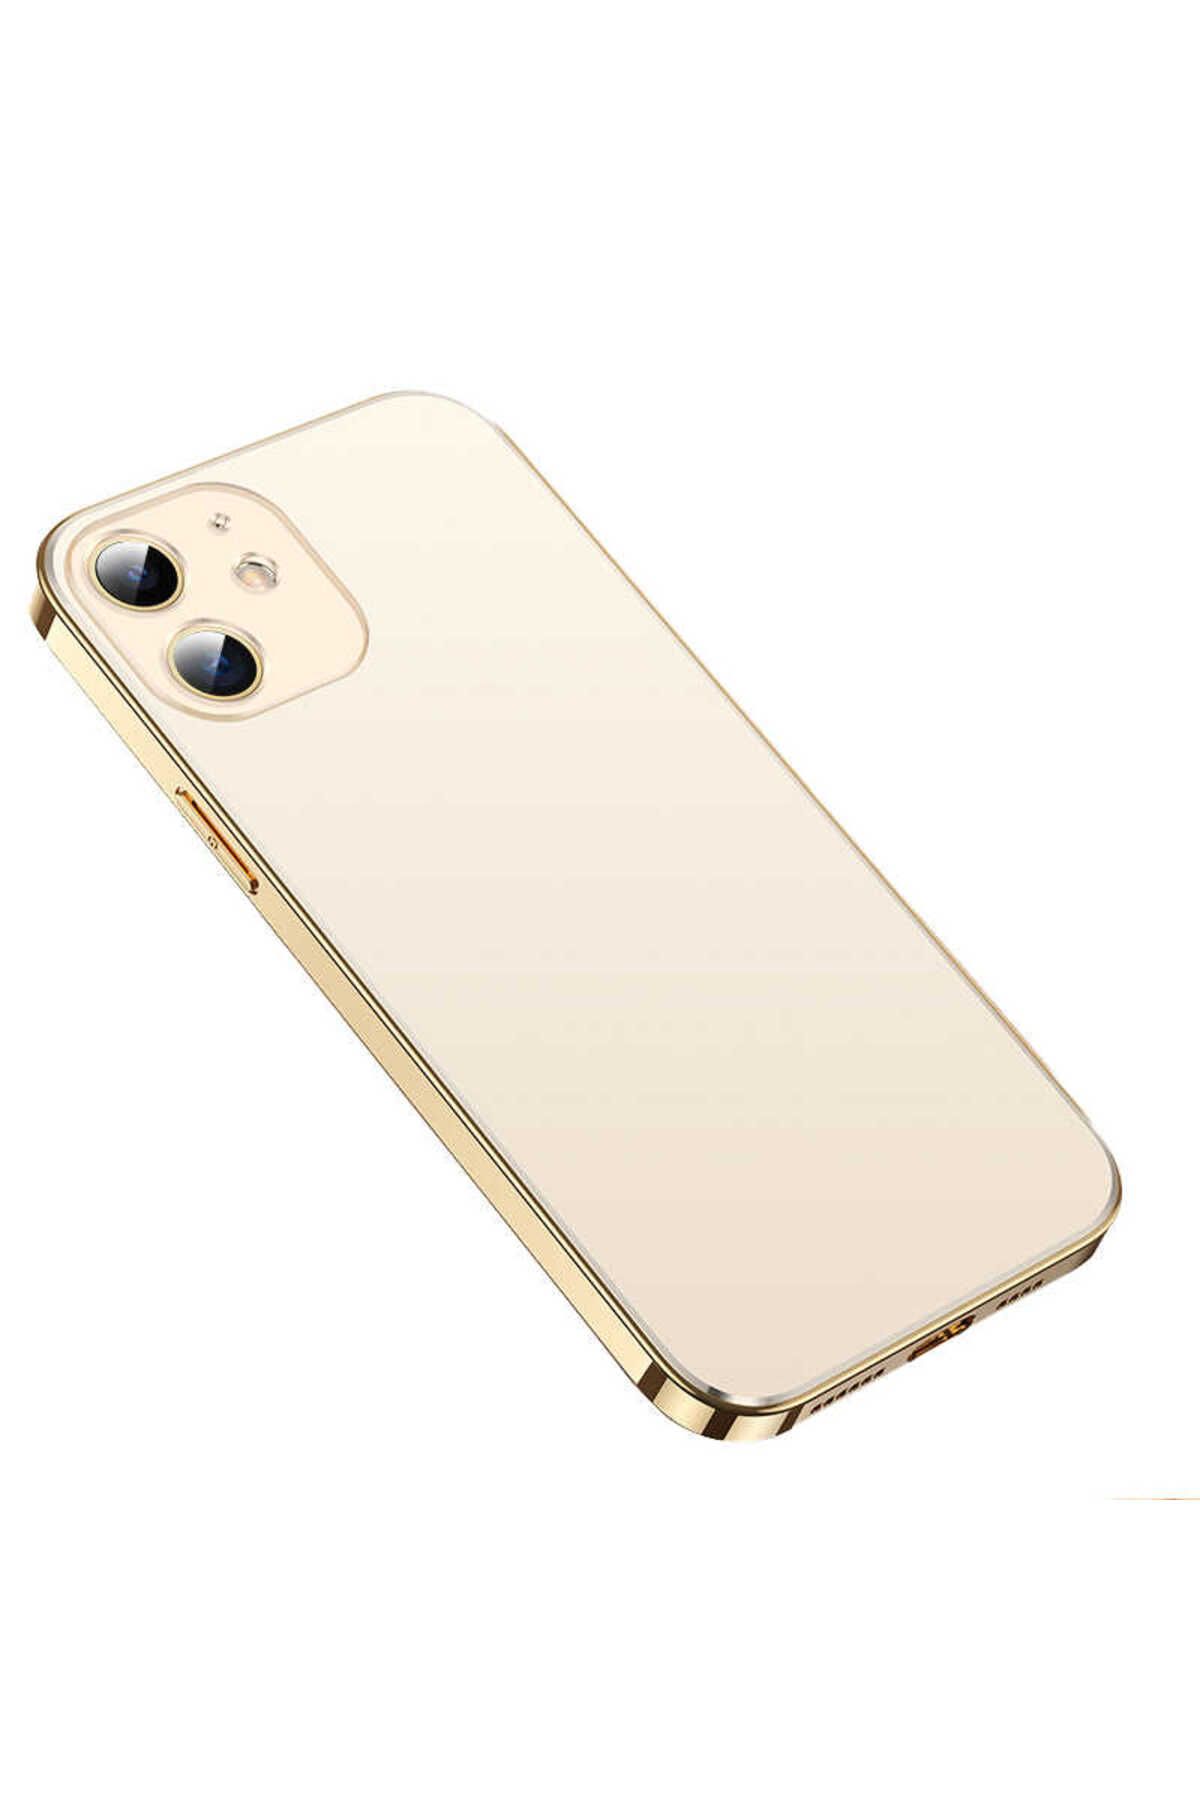 Casesion iPhone 11 Uyumlu MIR Bobo Kapak-Gold